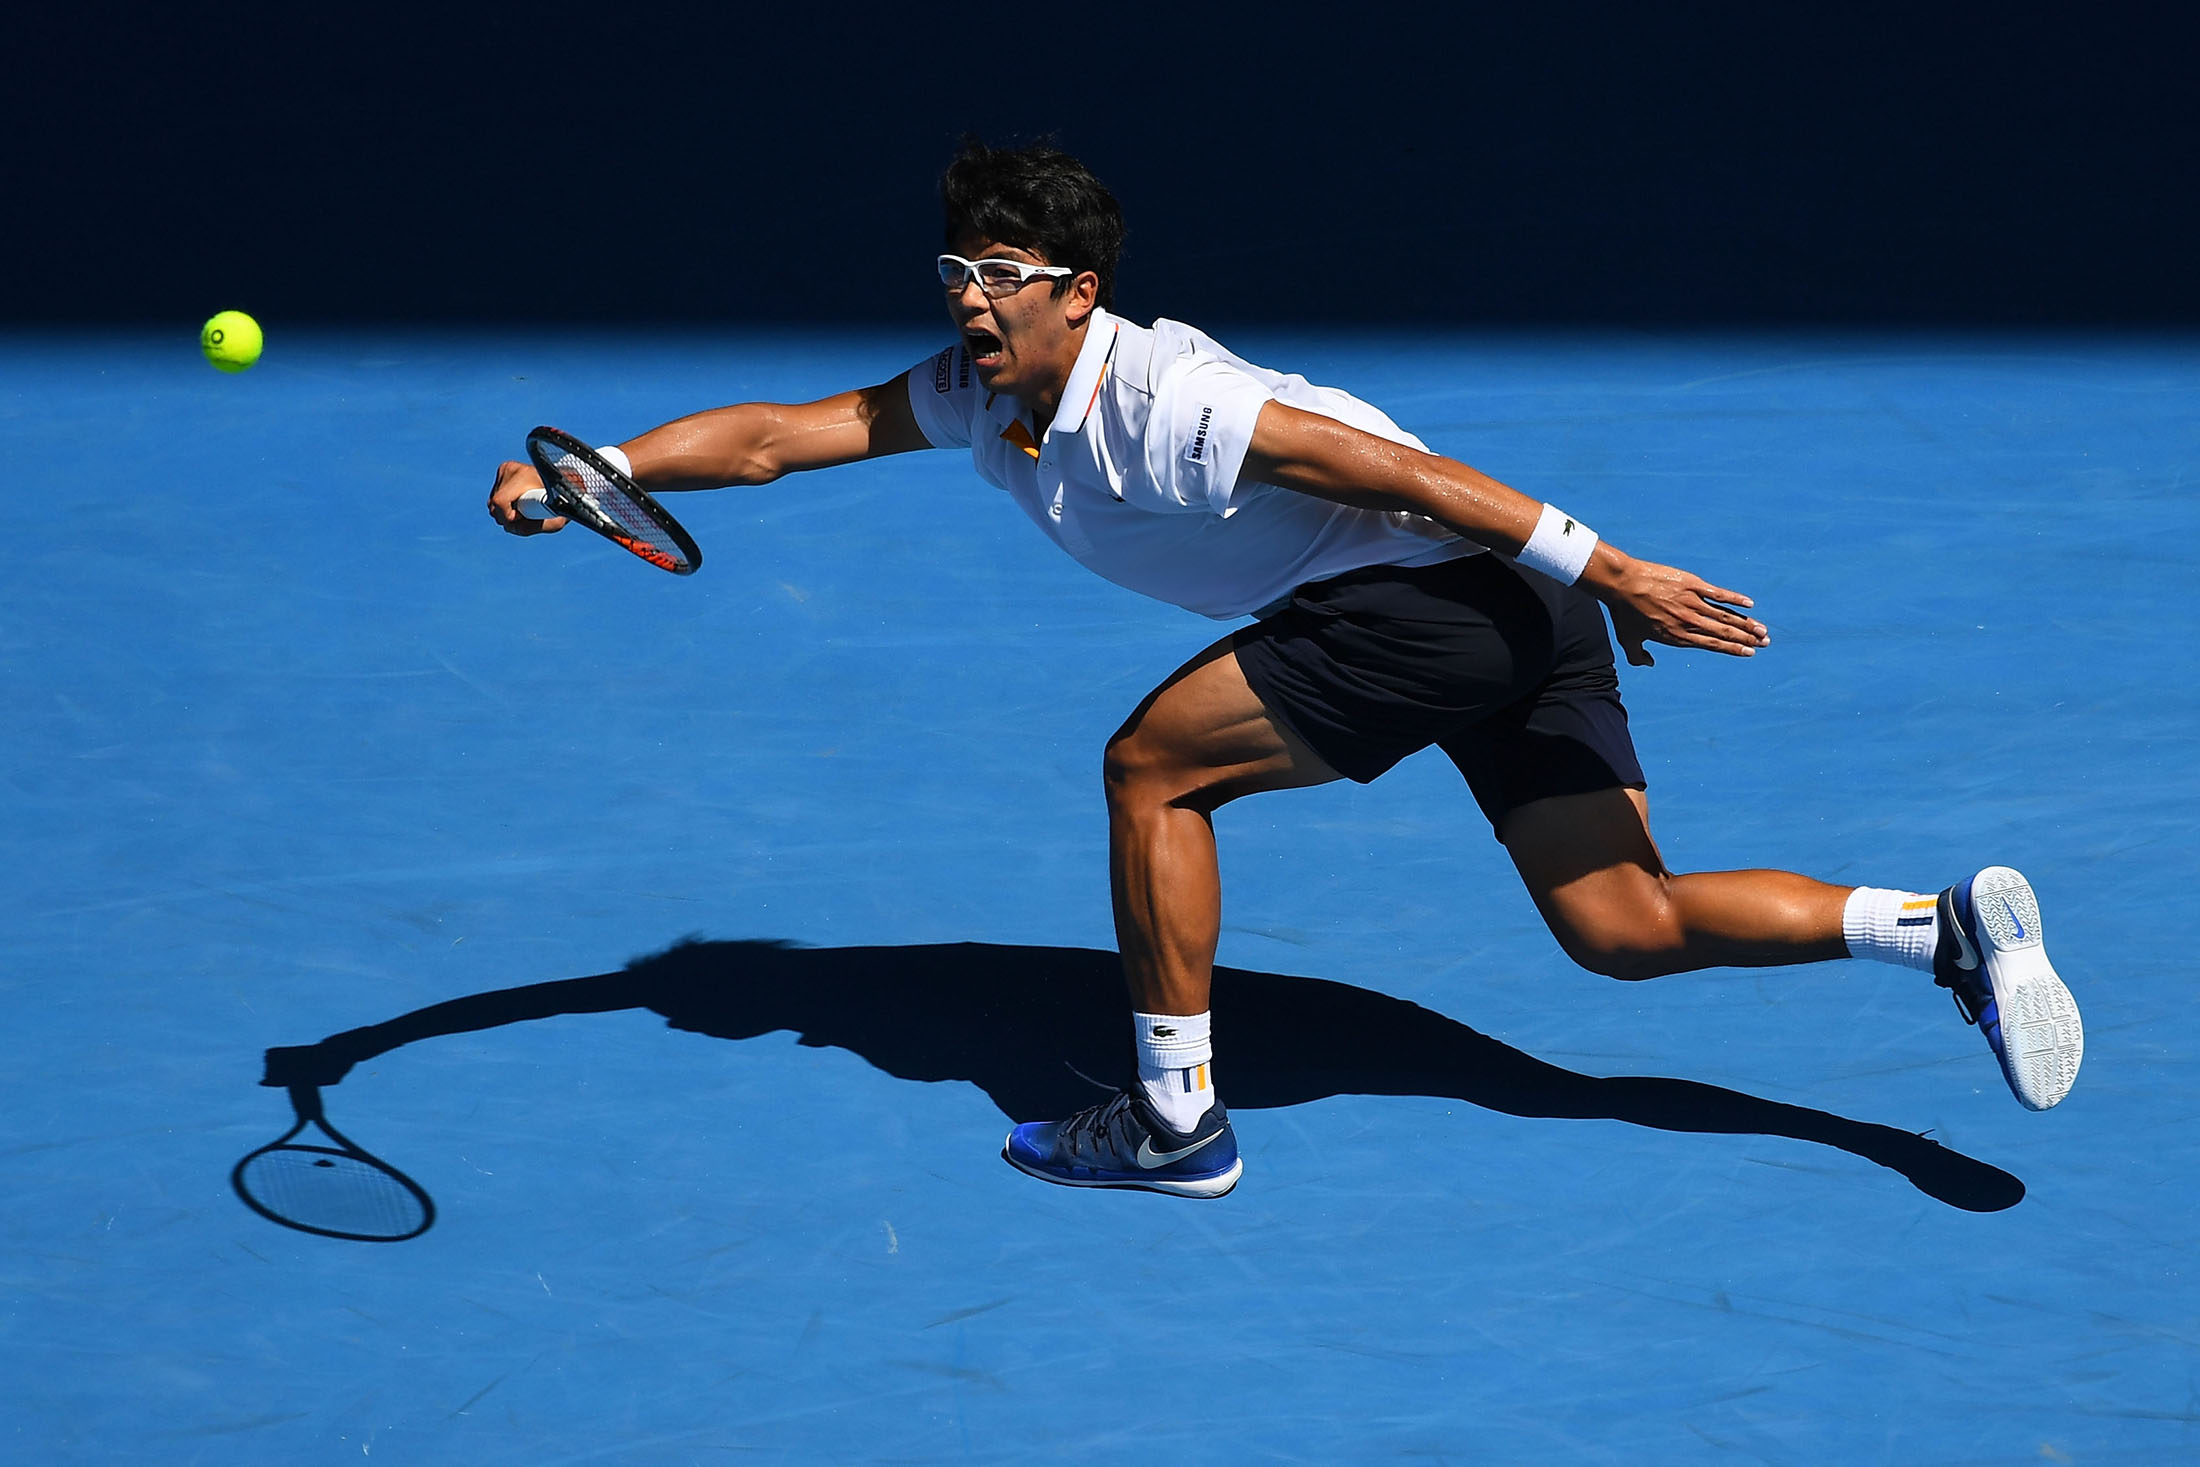 Korean Ace Has Eyes on Australian Open Prize, Oakley Endorsement - Bloomberg